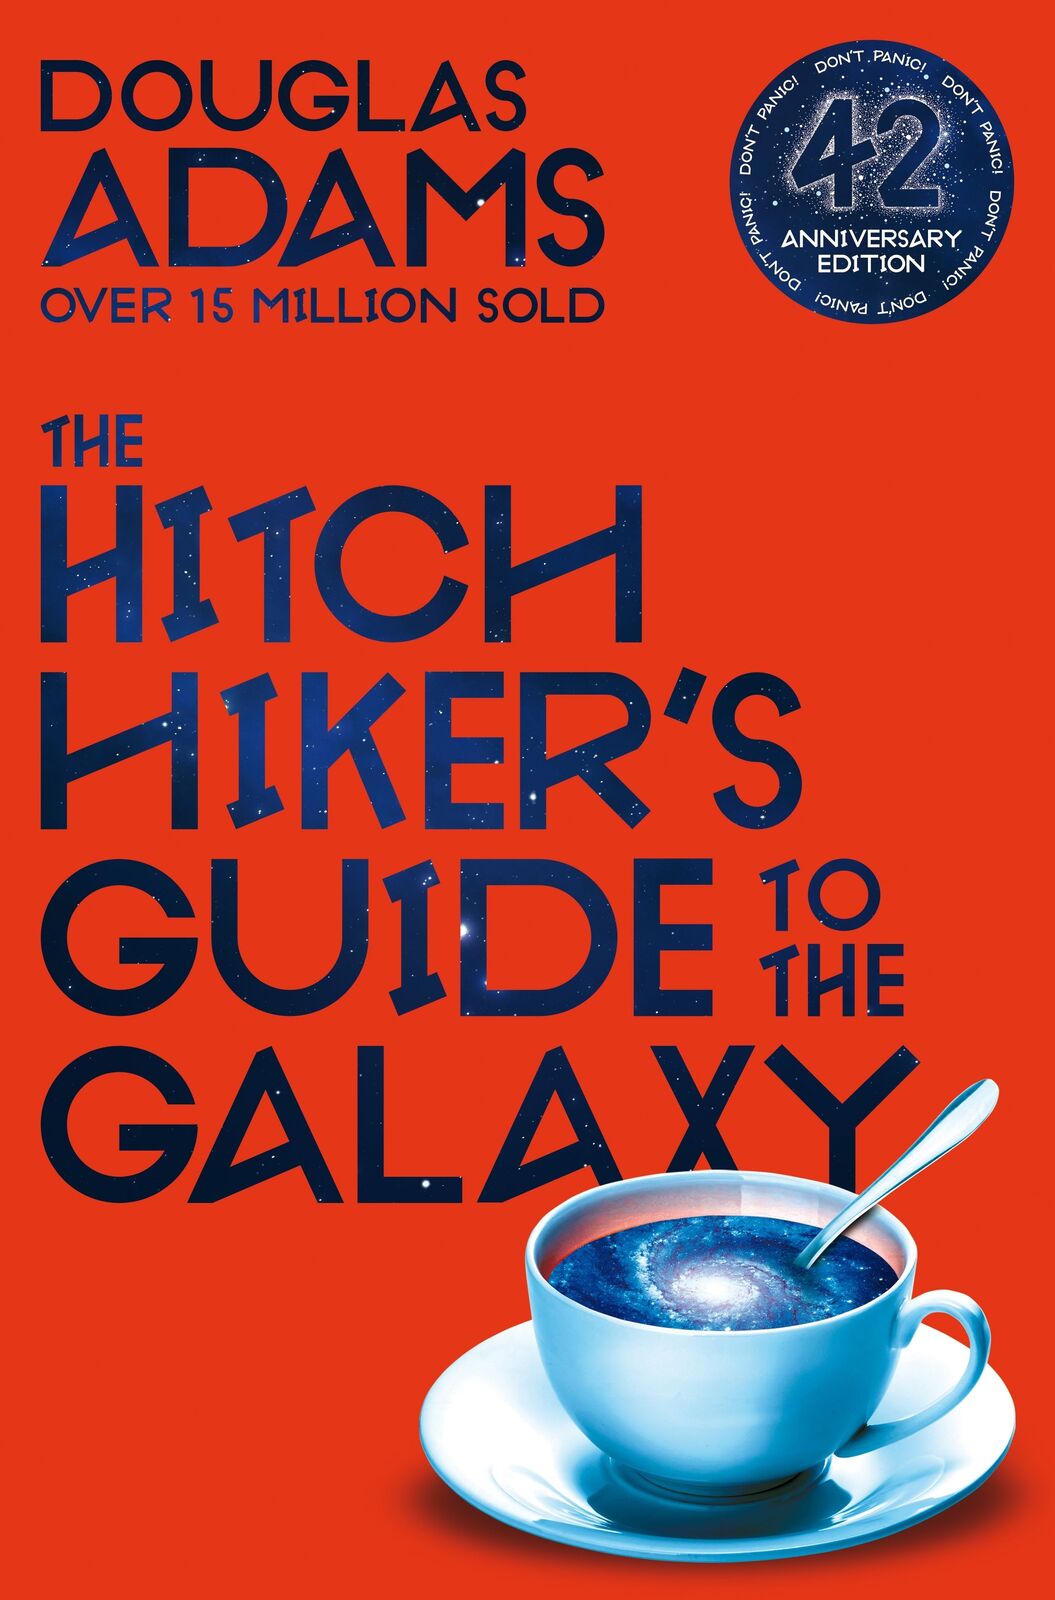 Douglas Adams: The Hitchhiker's Guide to the Galaxy (British English language, 2005, Pan Books)